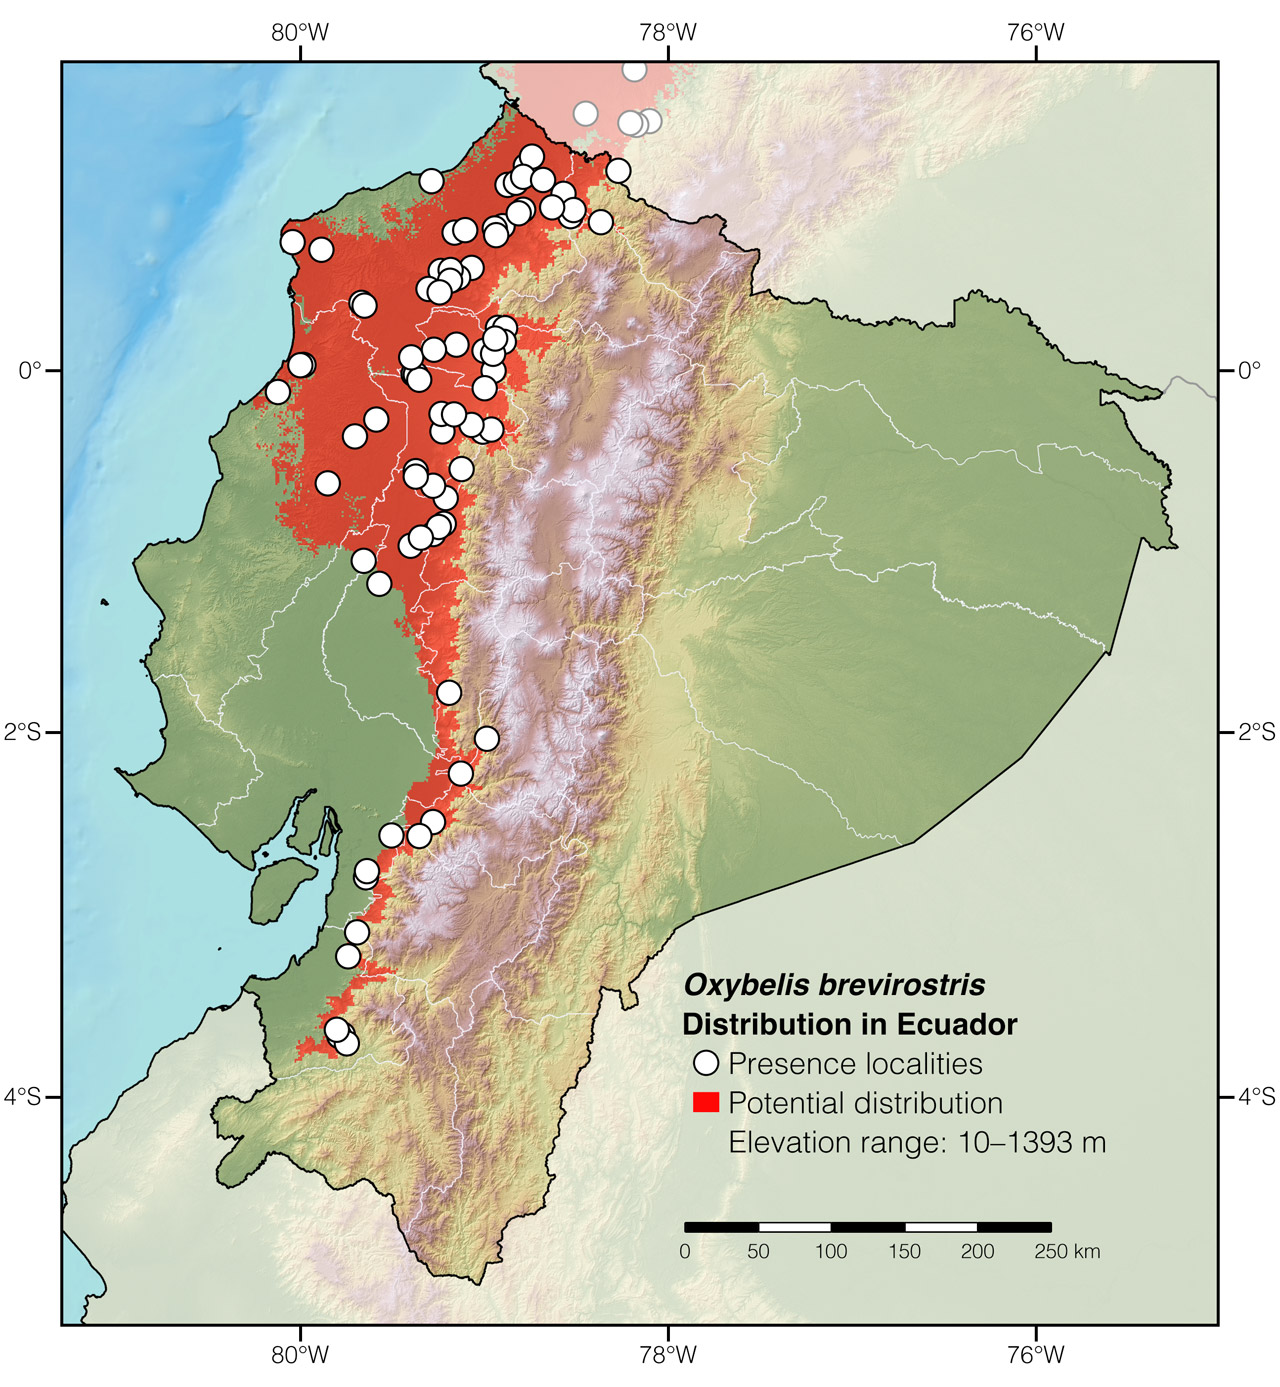 Distribution of Oxybelis brevirostris in Ecuador